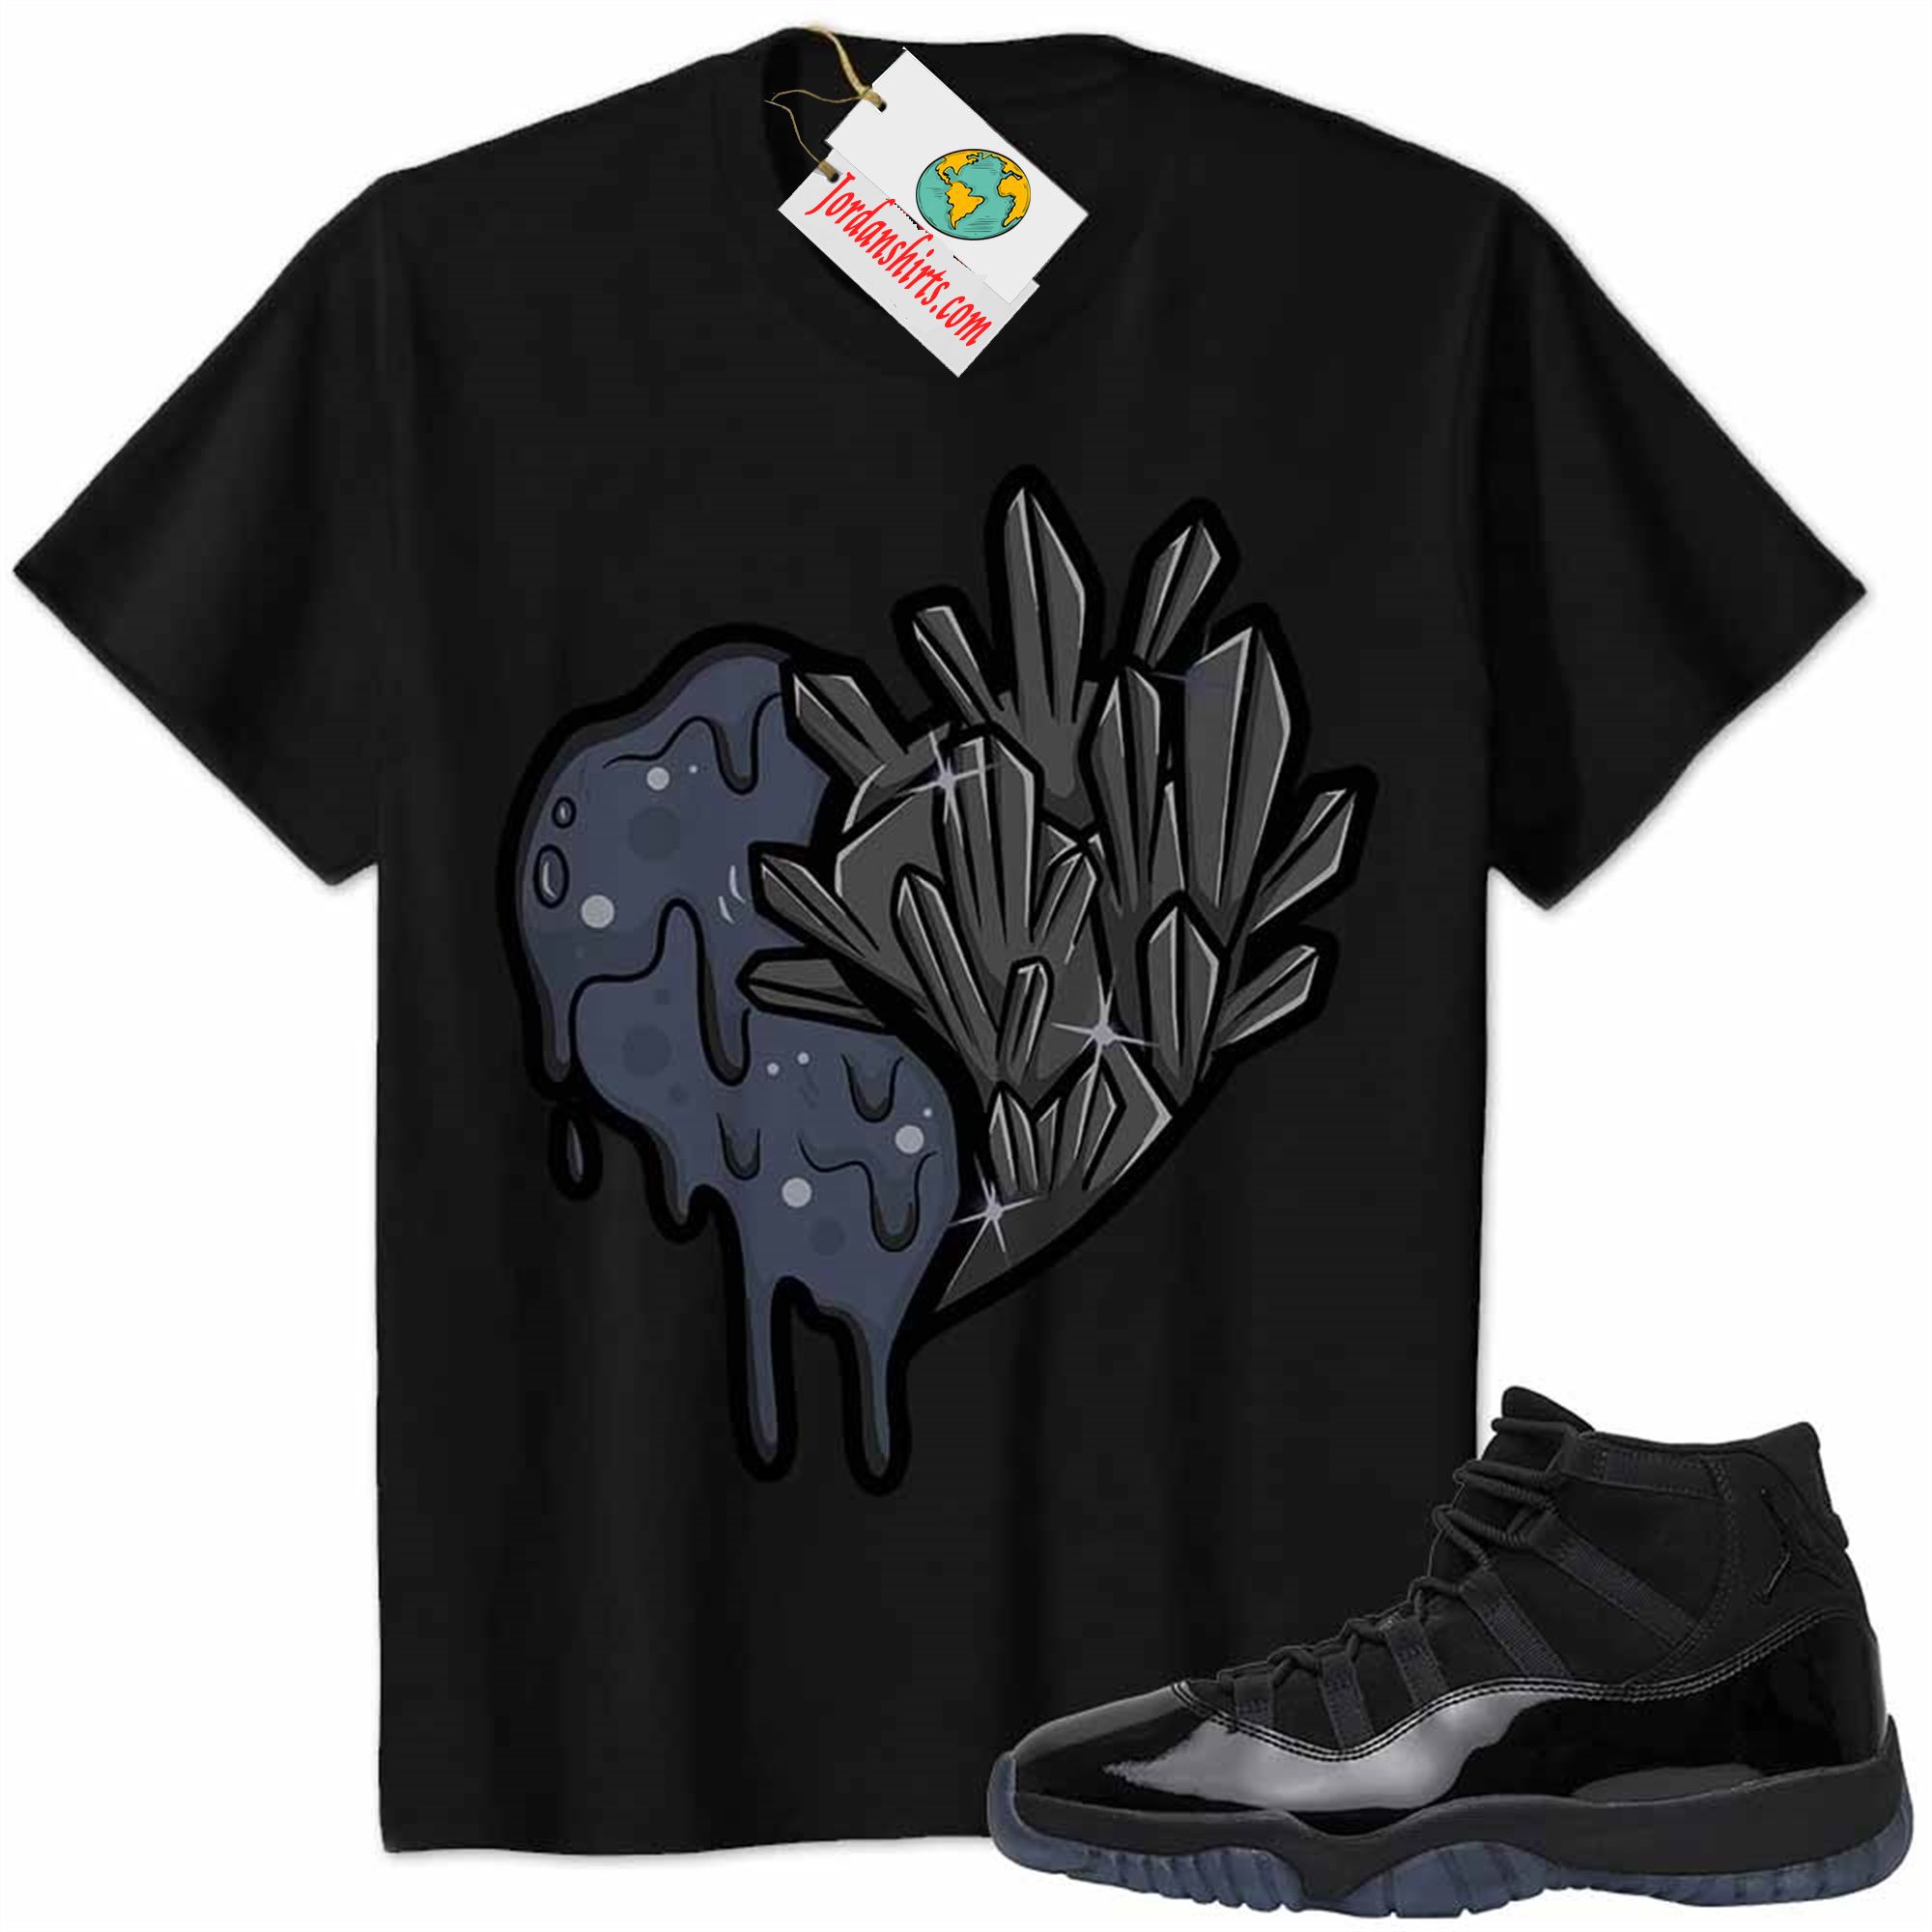 Jordan 11 Shirt, Crystal And Melt Heart Black Air Jordan 11 Cap And Gown 11s Size Up To 5xl